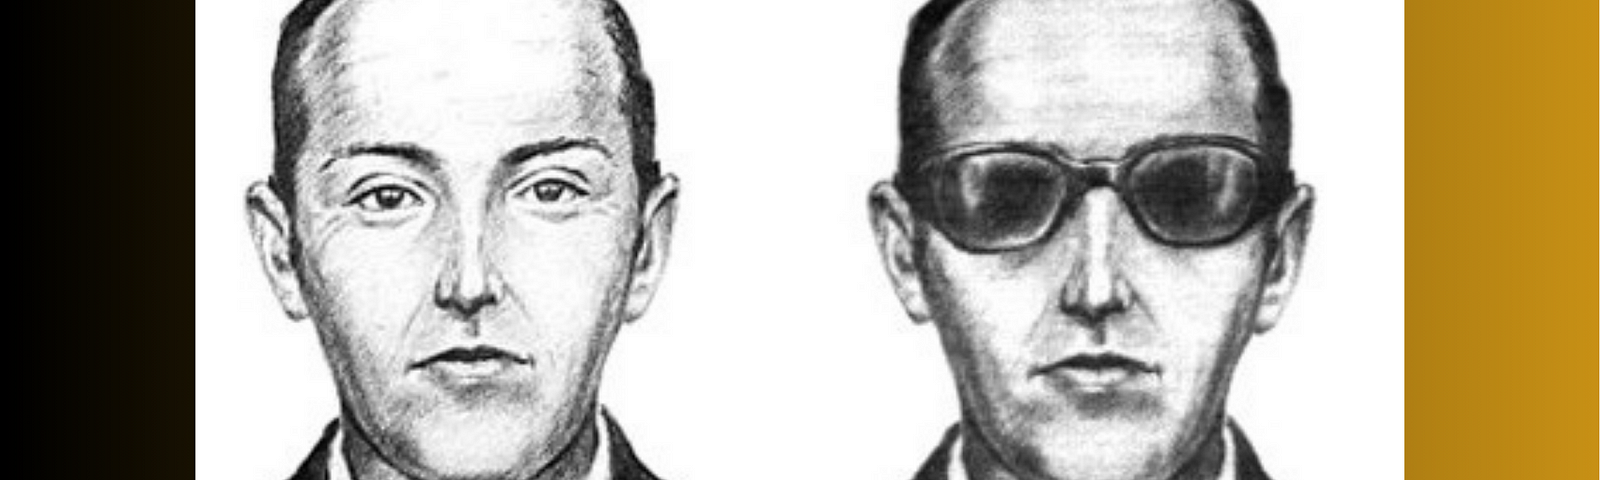 FBI 1971 Composite Sketch of DB Cooper